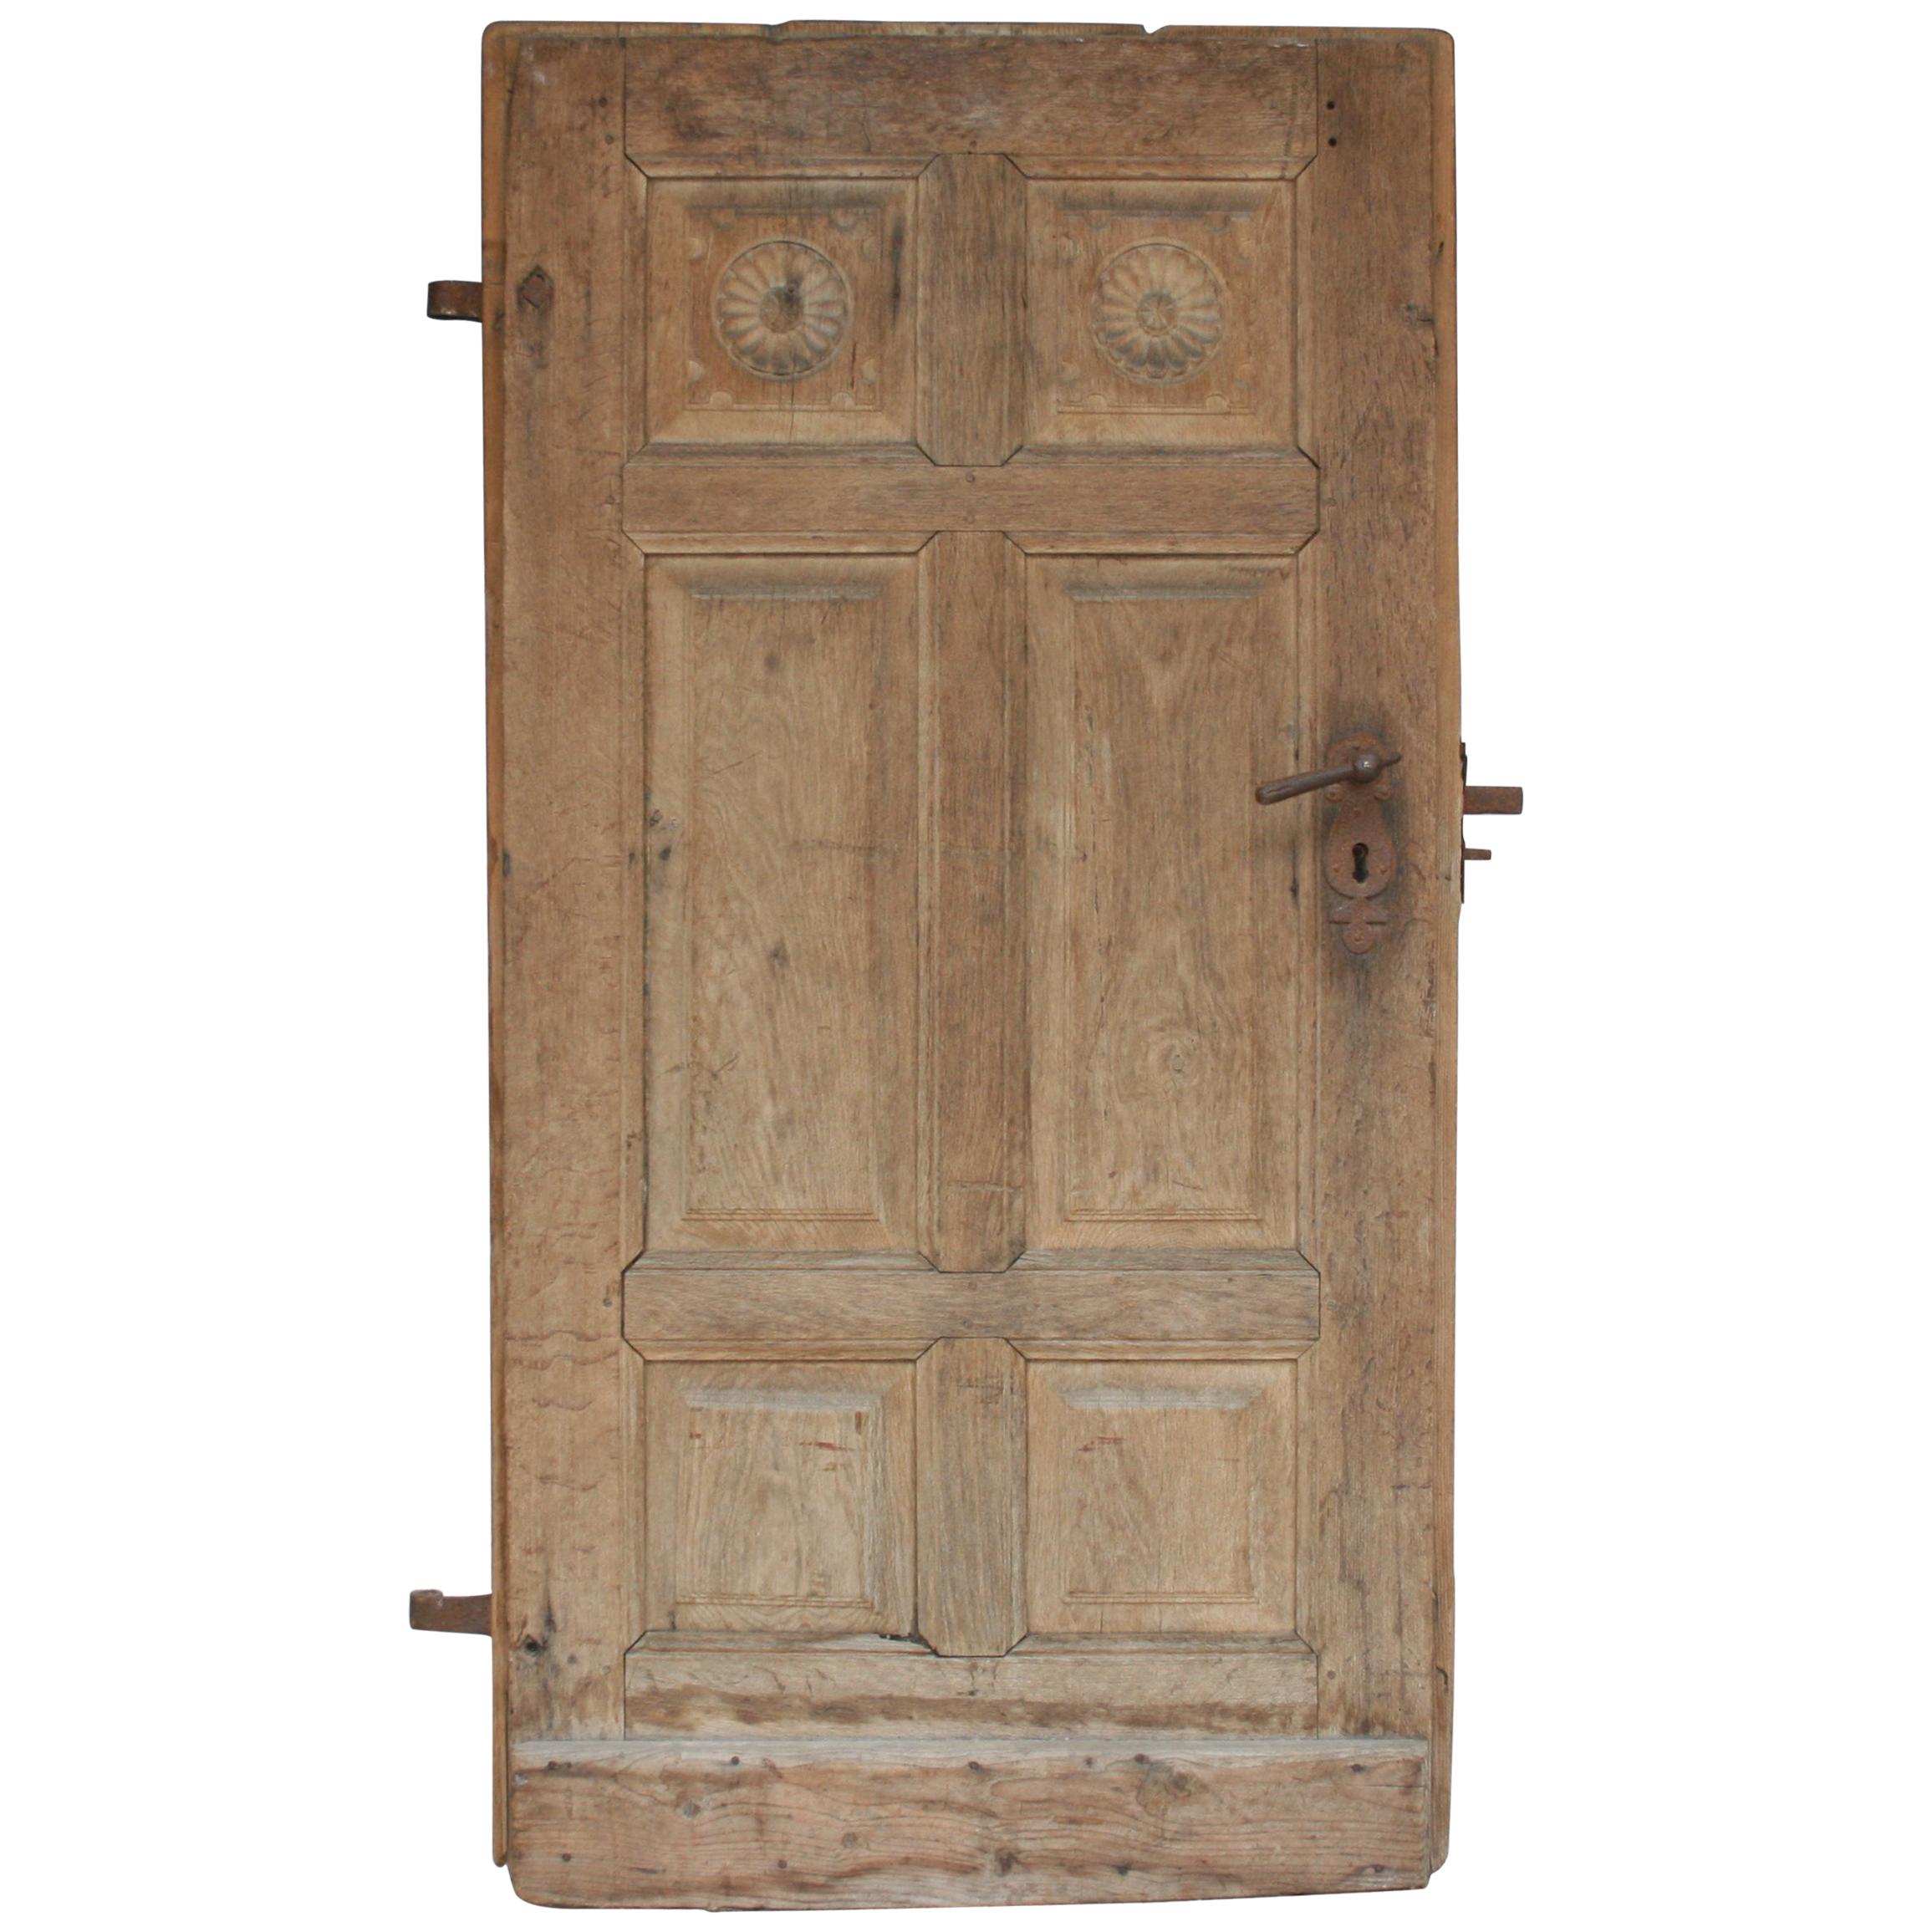 Antique German Door Made of Oak and Fir Wood